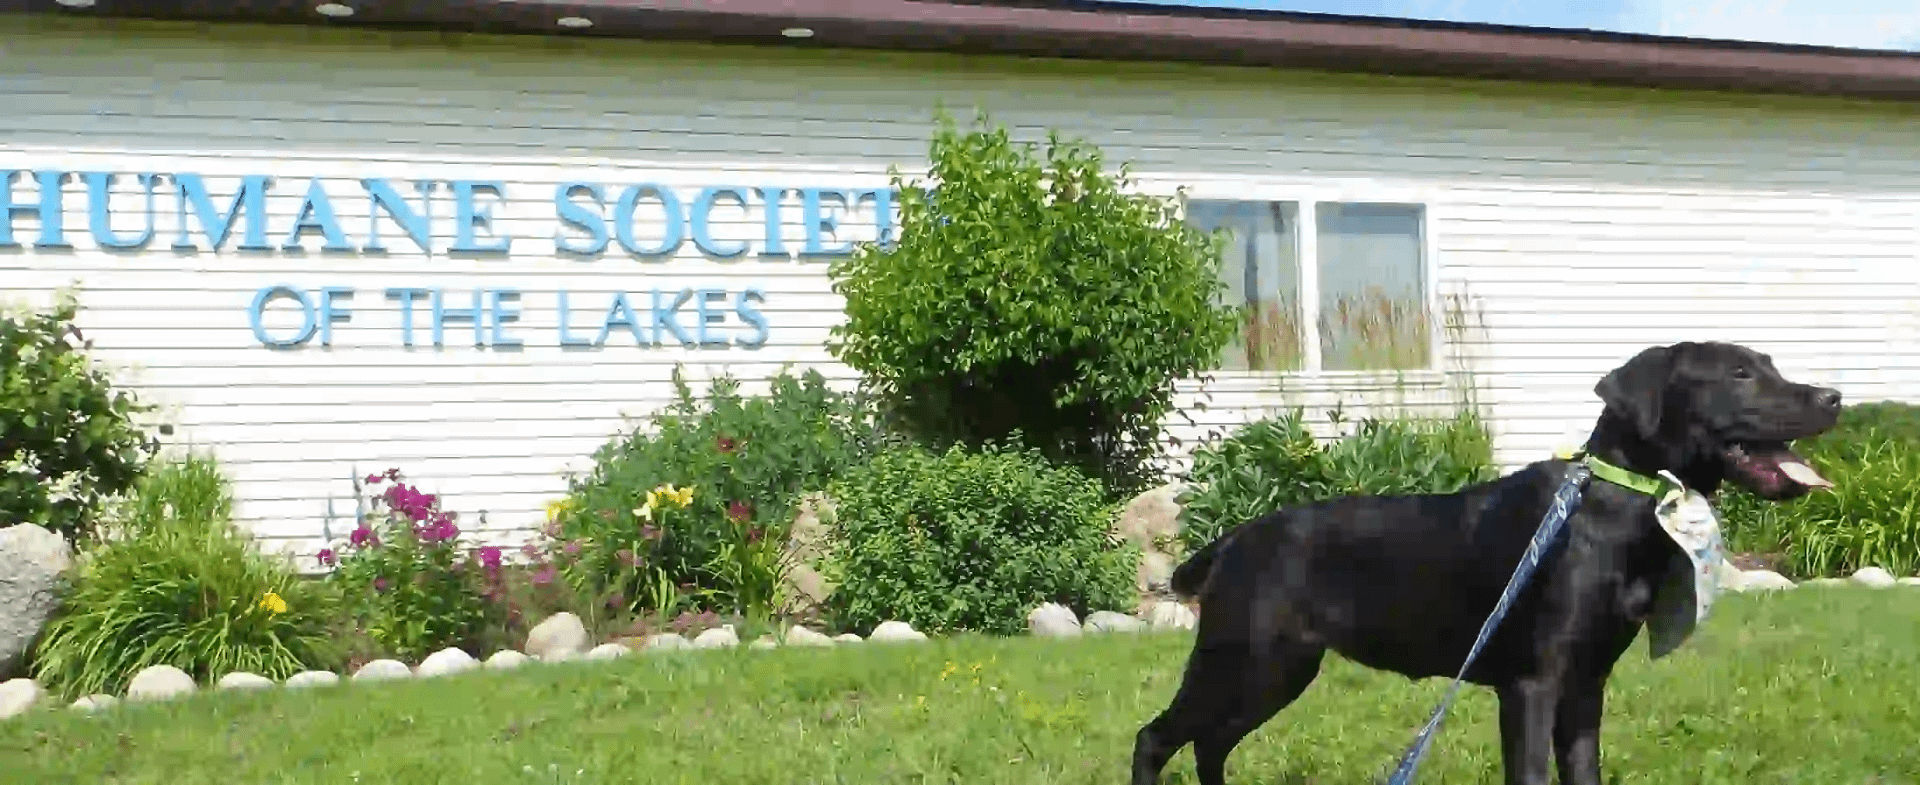 Humane Society of the Lakes-2